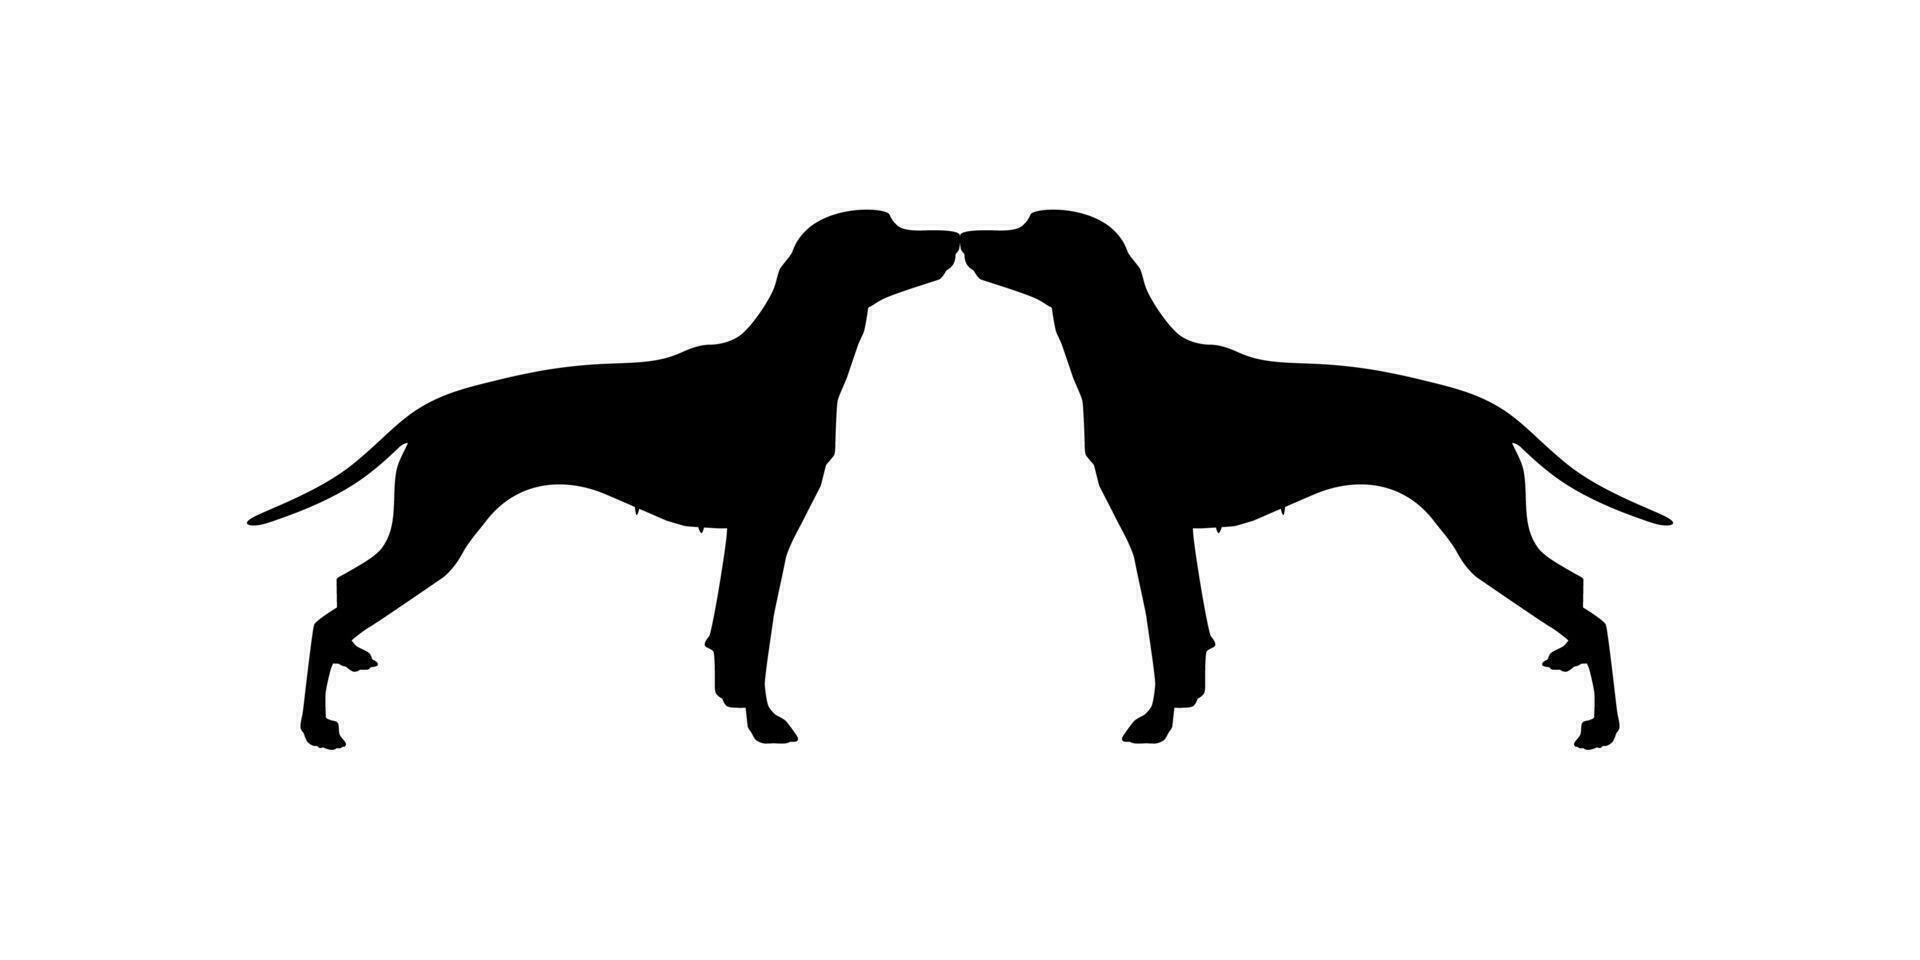 Pair of the Dog Silhouette for Logo, Art Illustration, Apps, Pictogram, Website, or Graphic Design Element. Vector Illustration